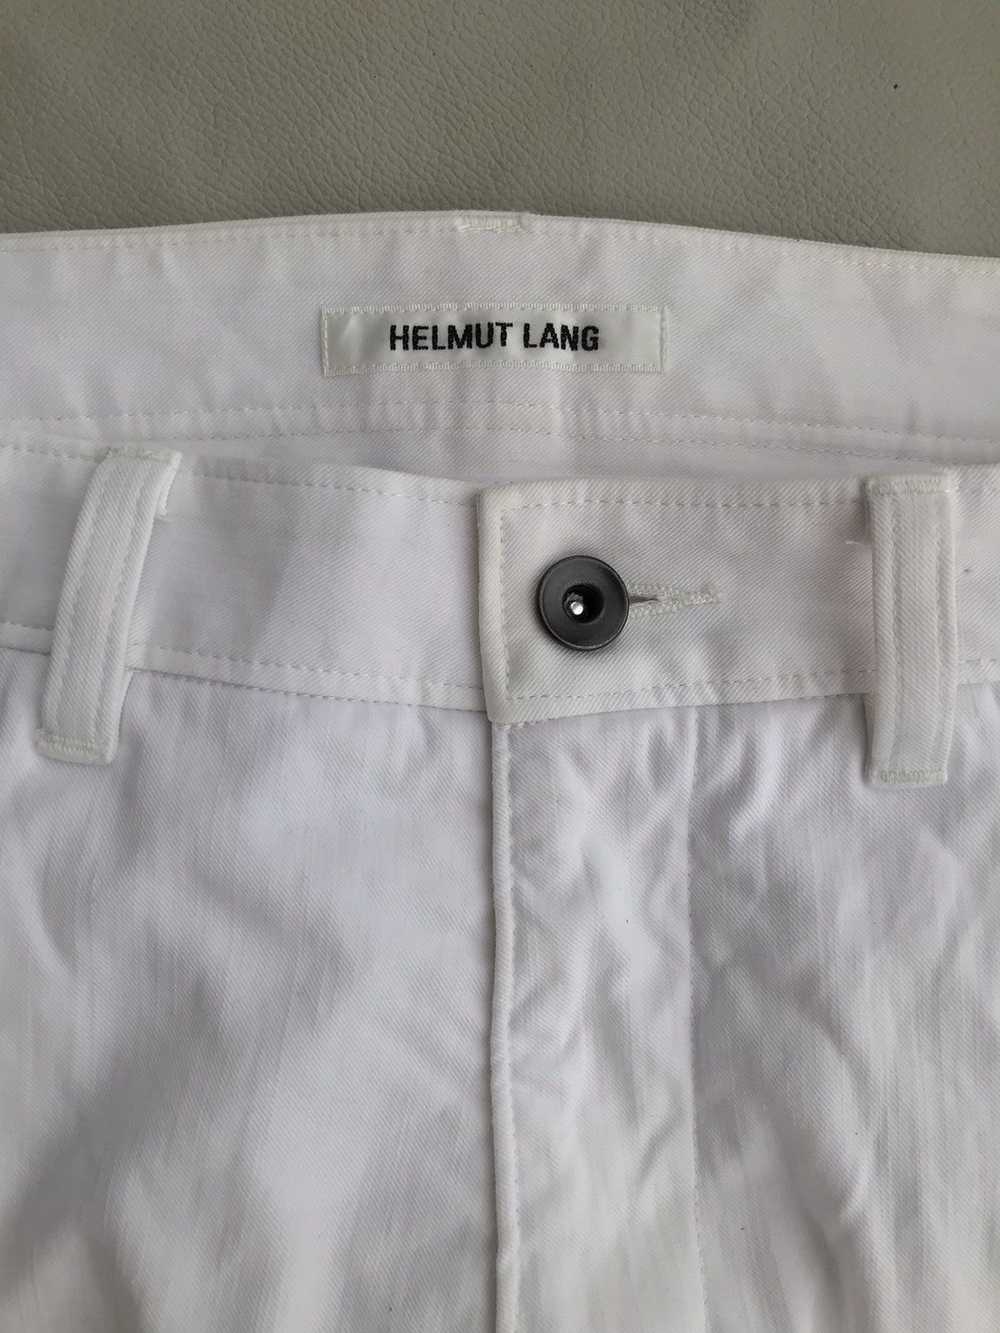 Helmut Lang Helmut Lang Pants Double Zip Pocket - image 3